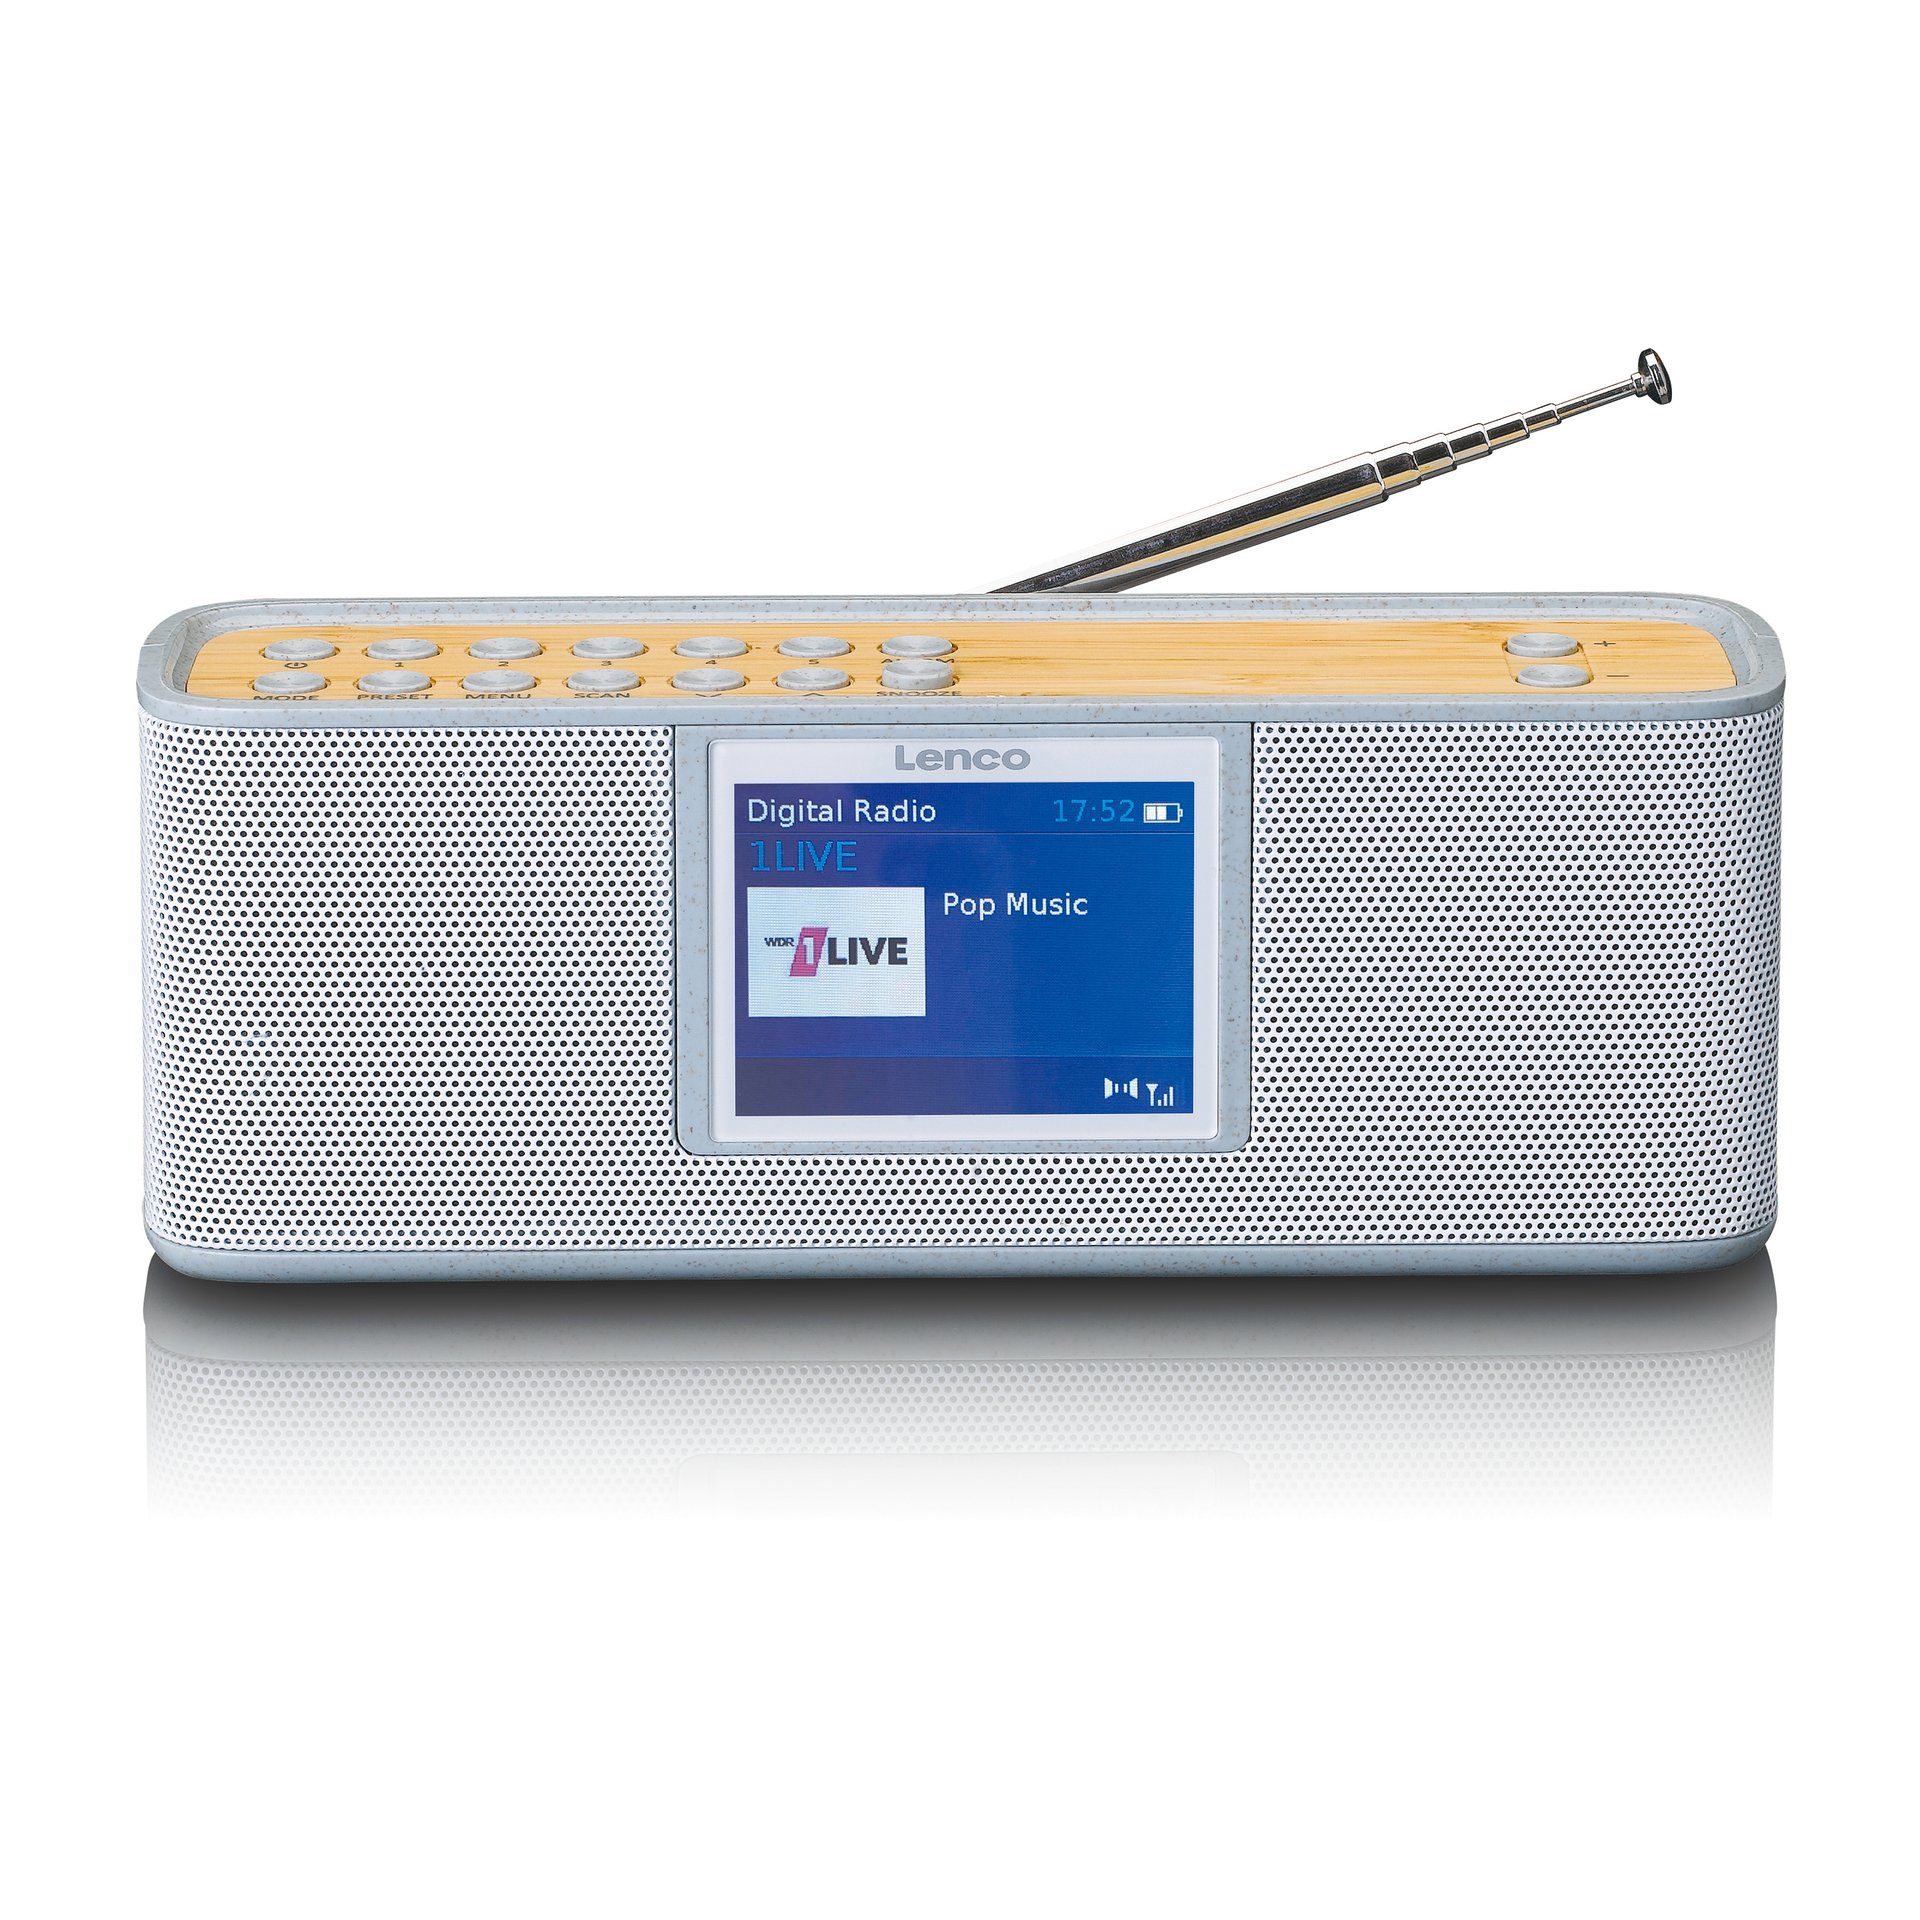 Lenco PDR-046GY - DAB+/FM (Digitalradio Digitalradio Radio (DAB) (DAB)